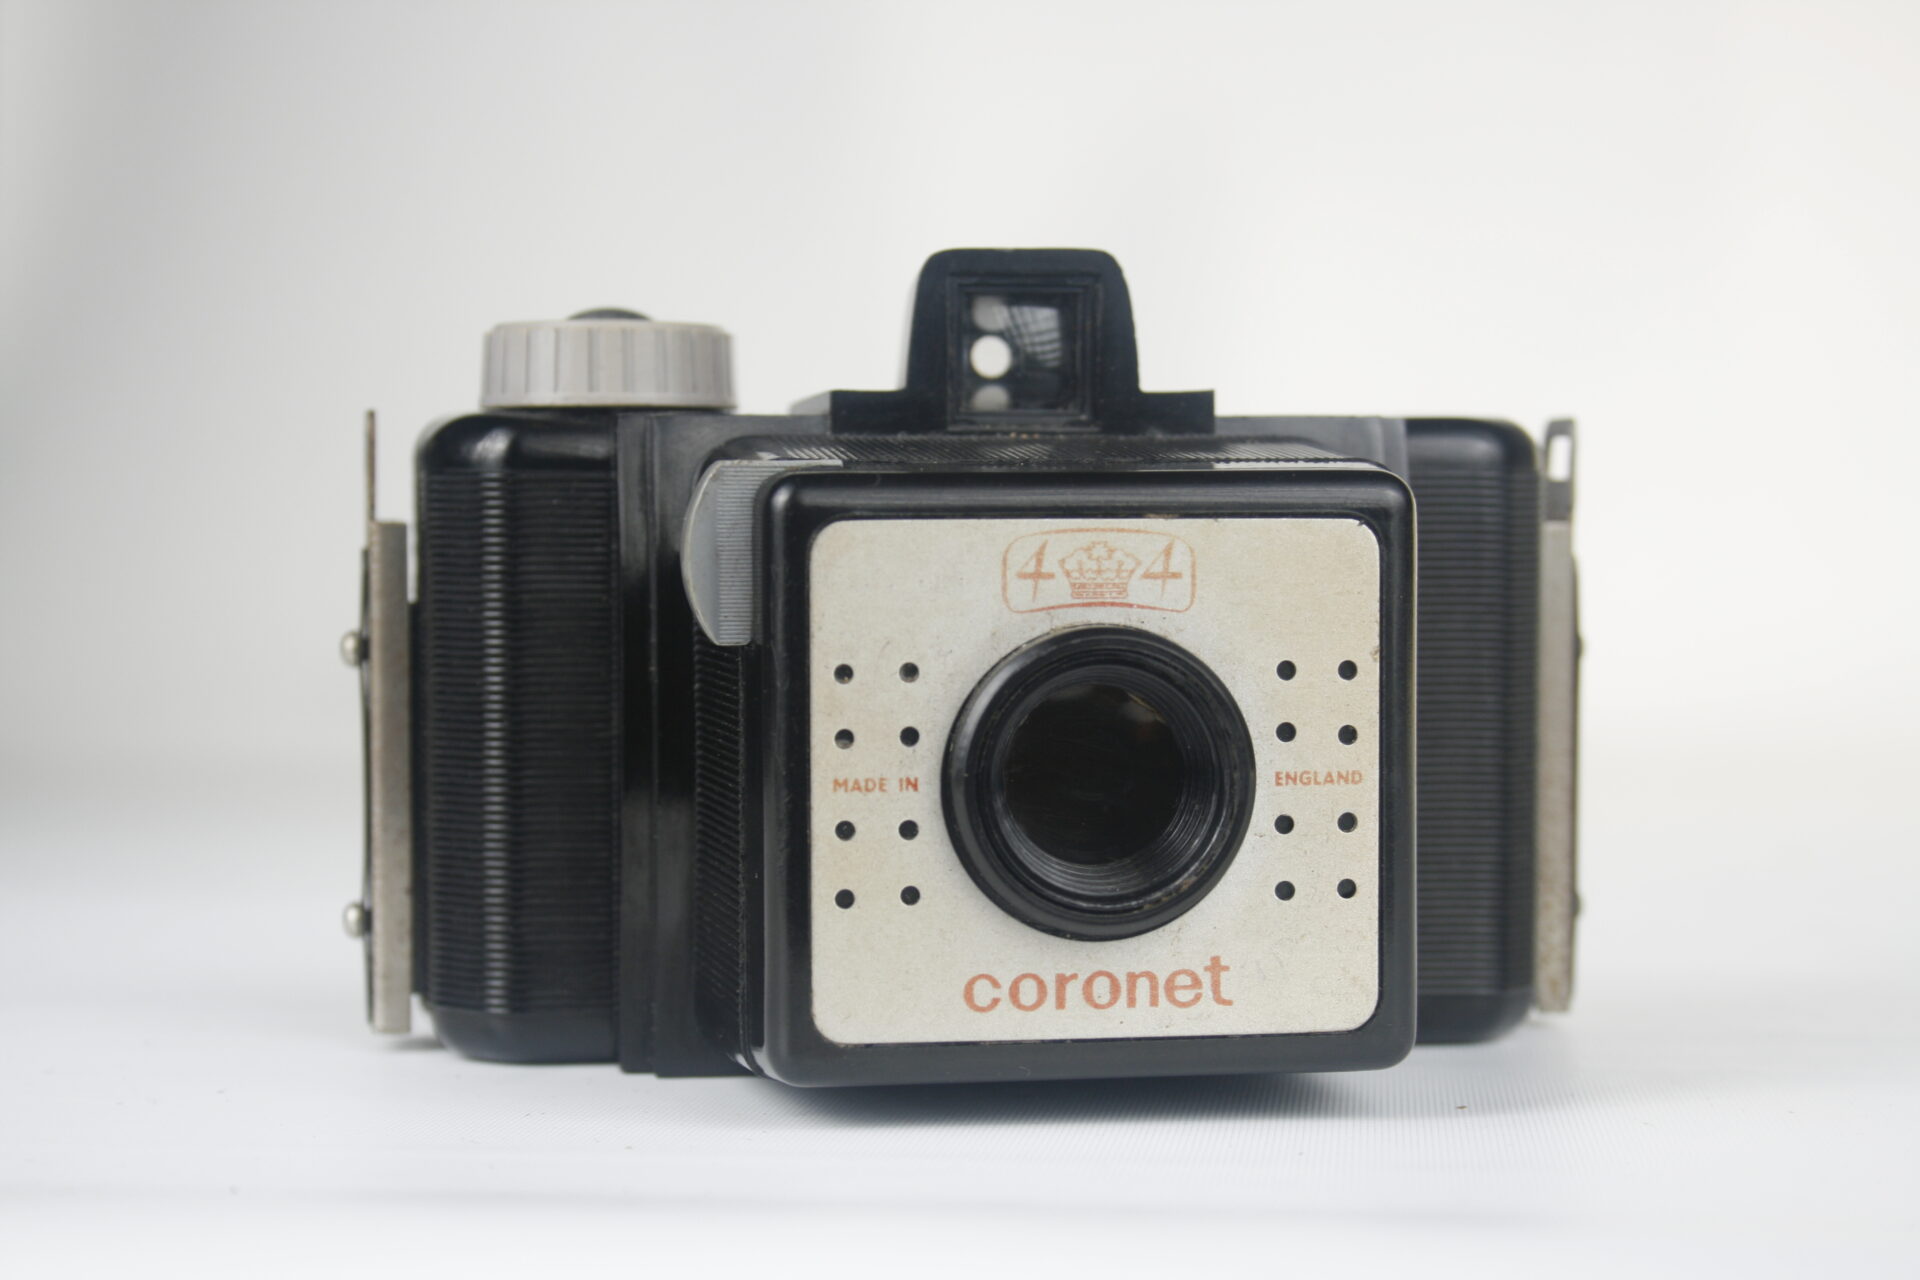 Coronet 4-4. 127 film. 1957. Engeland.